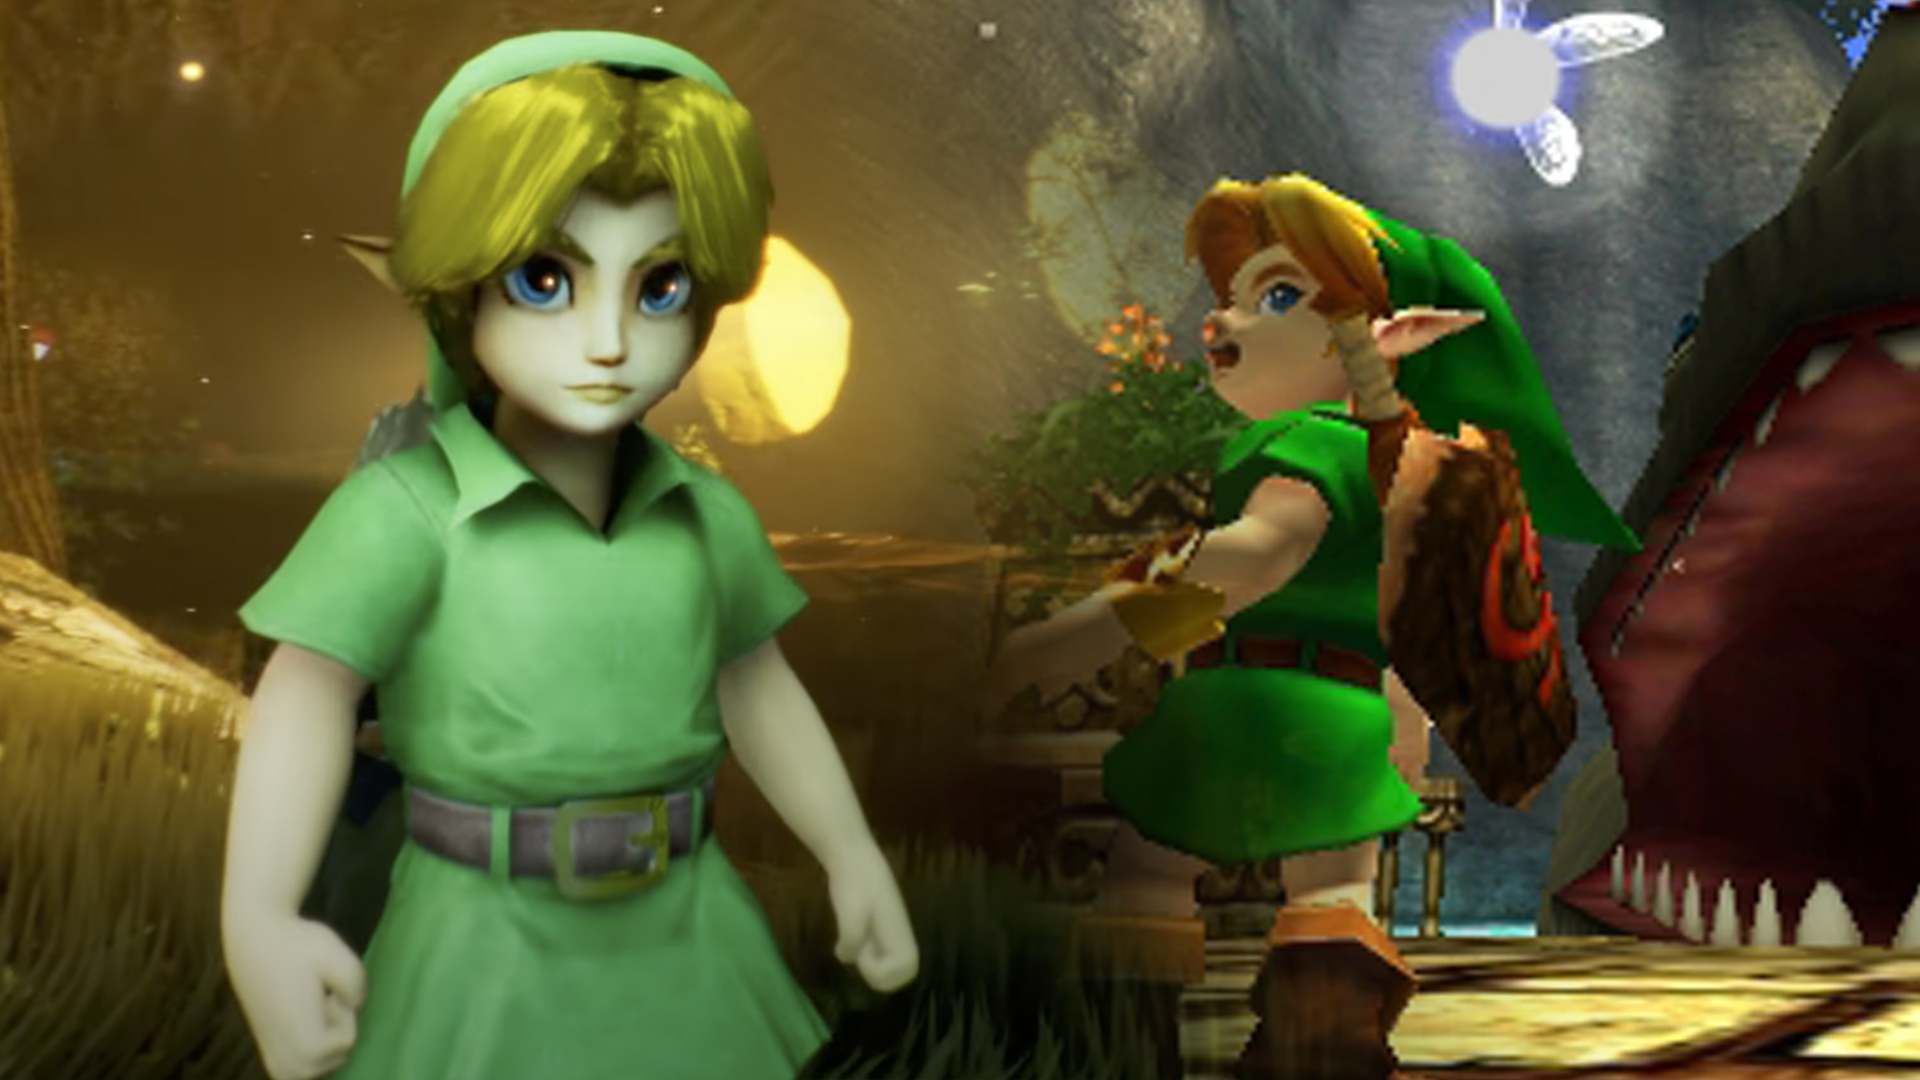 New Zelda Ocarina of Time Fan Remake in Unreal Engine 5 video shows off  Lumen improvements